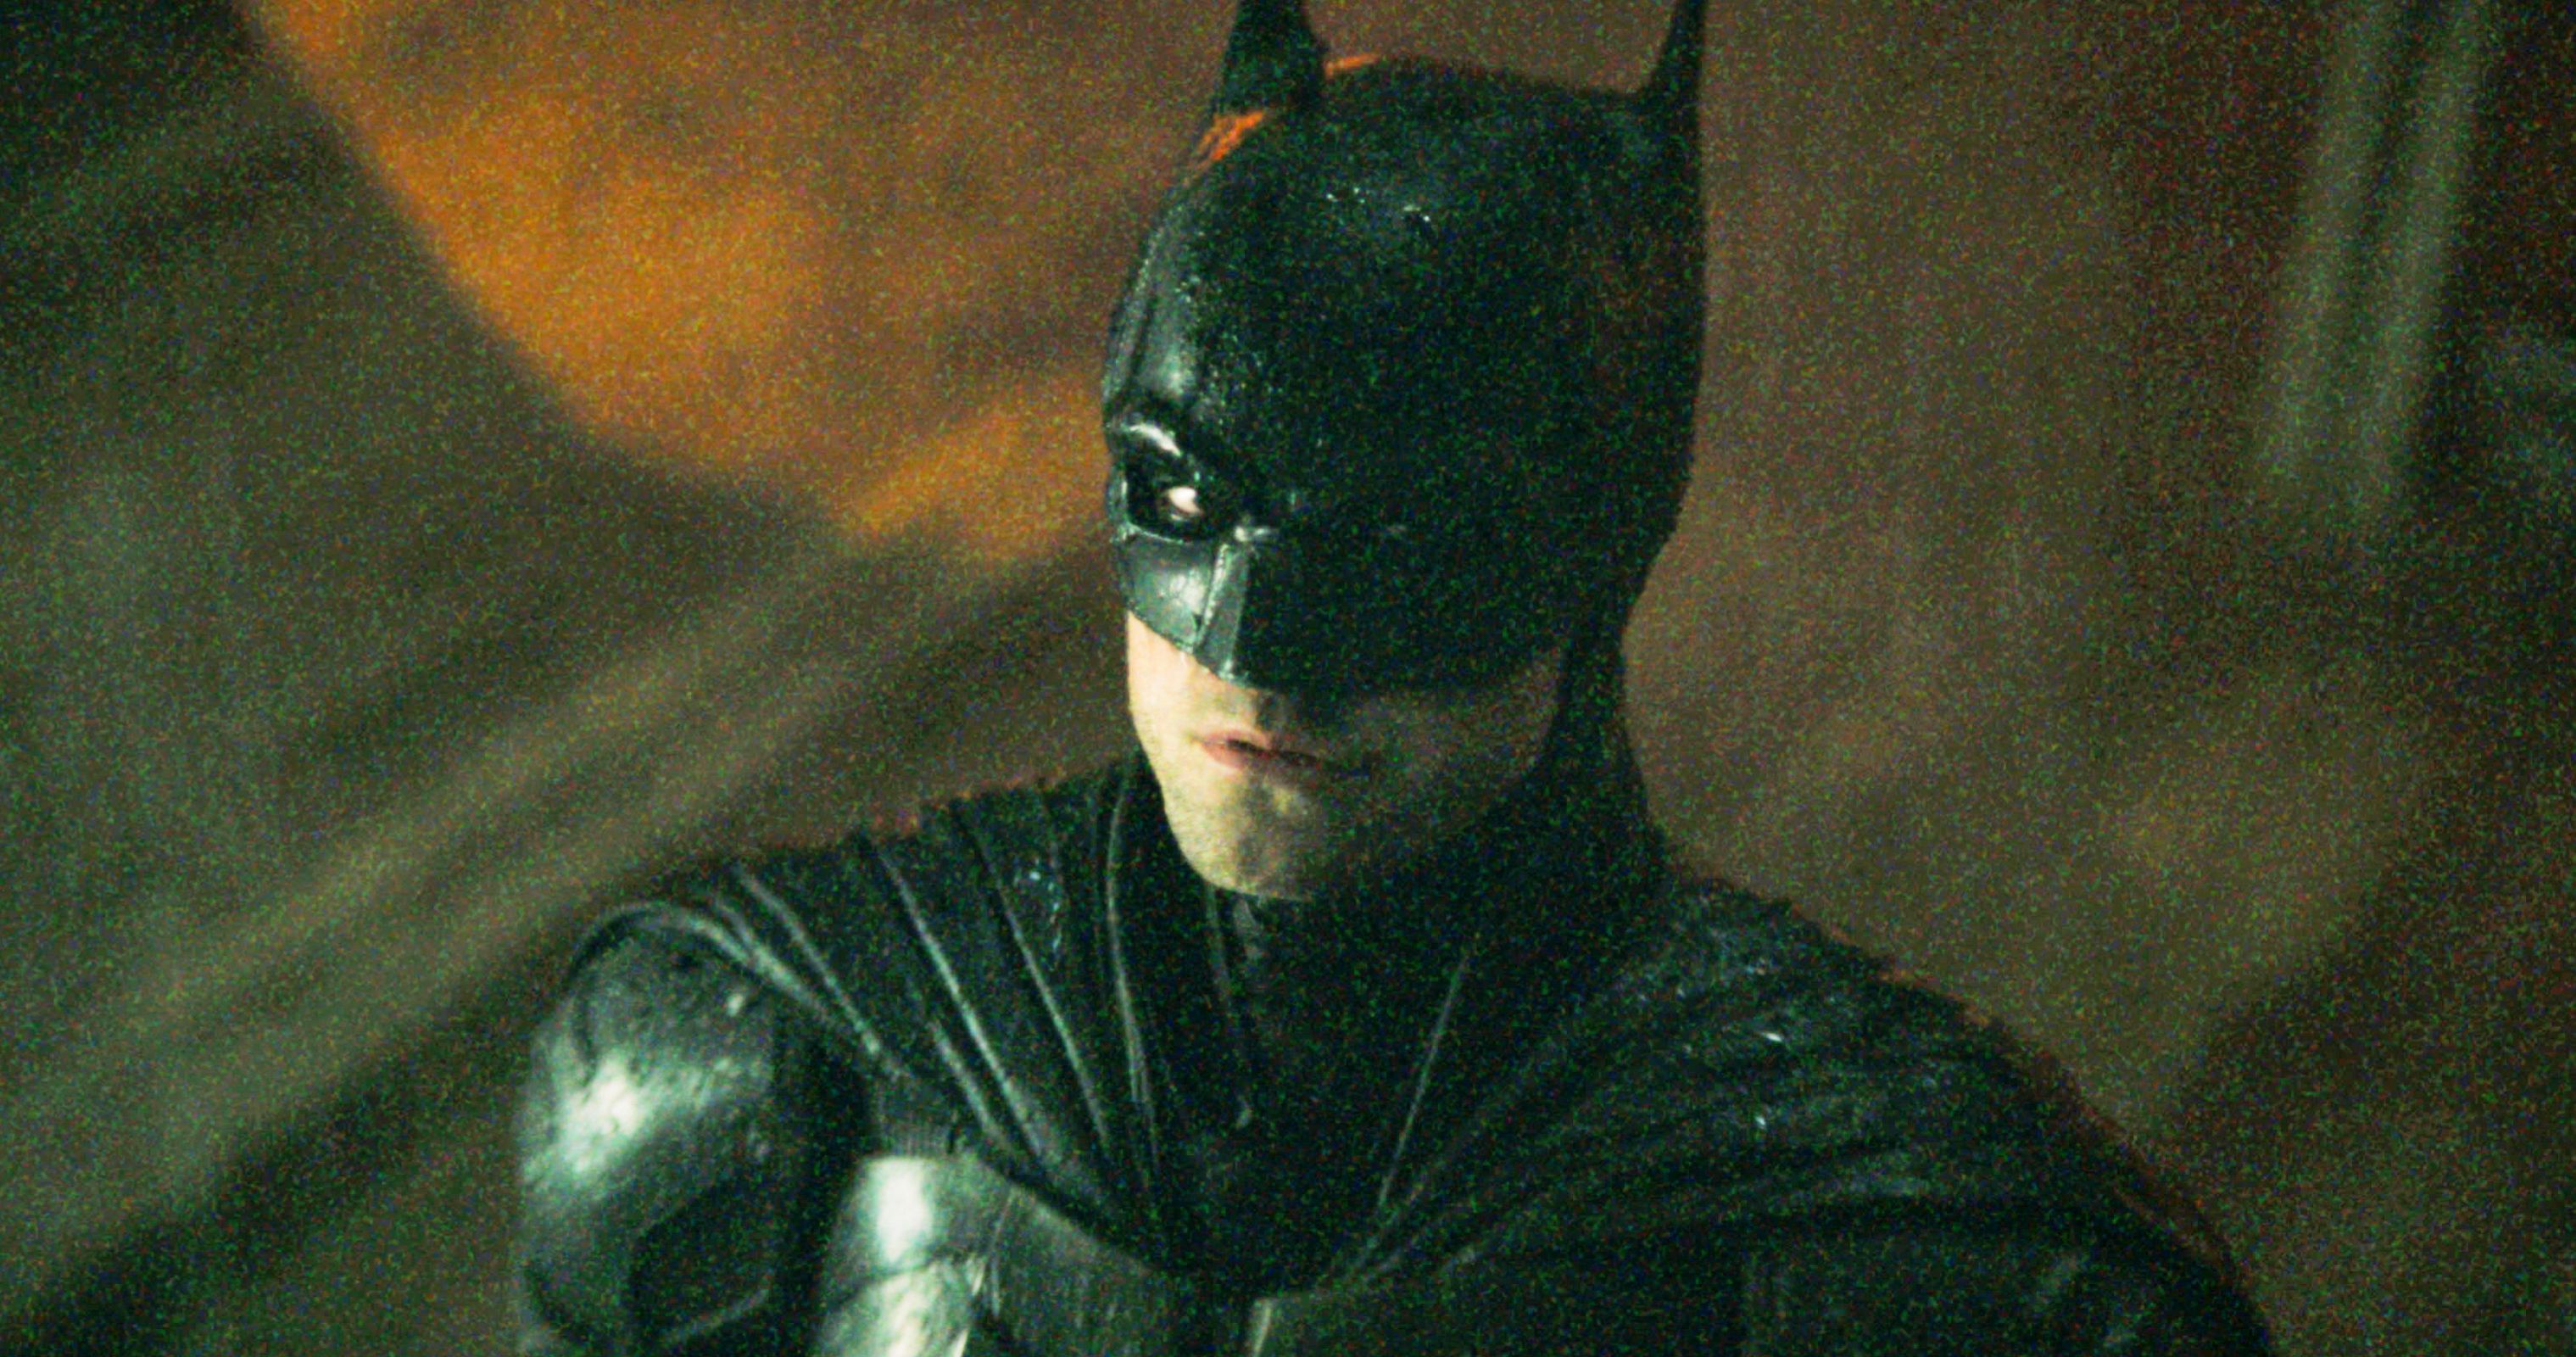 The Batman 4K Trailer #2 Brings Stunning Look at Robert Pattinson's Dark Knight Debut